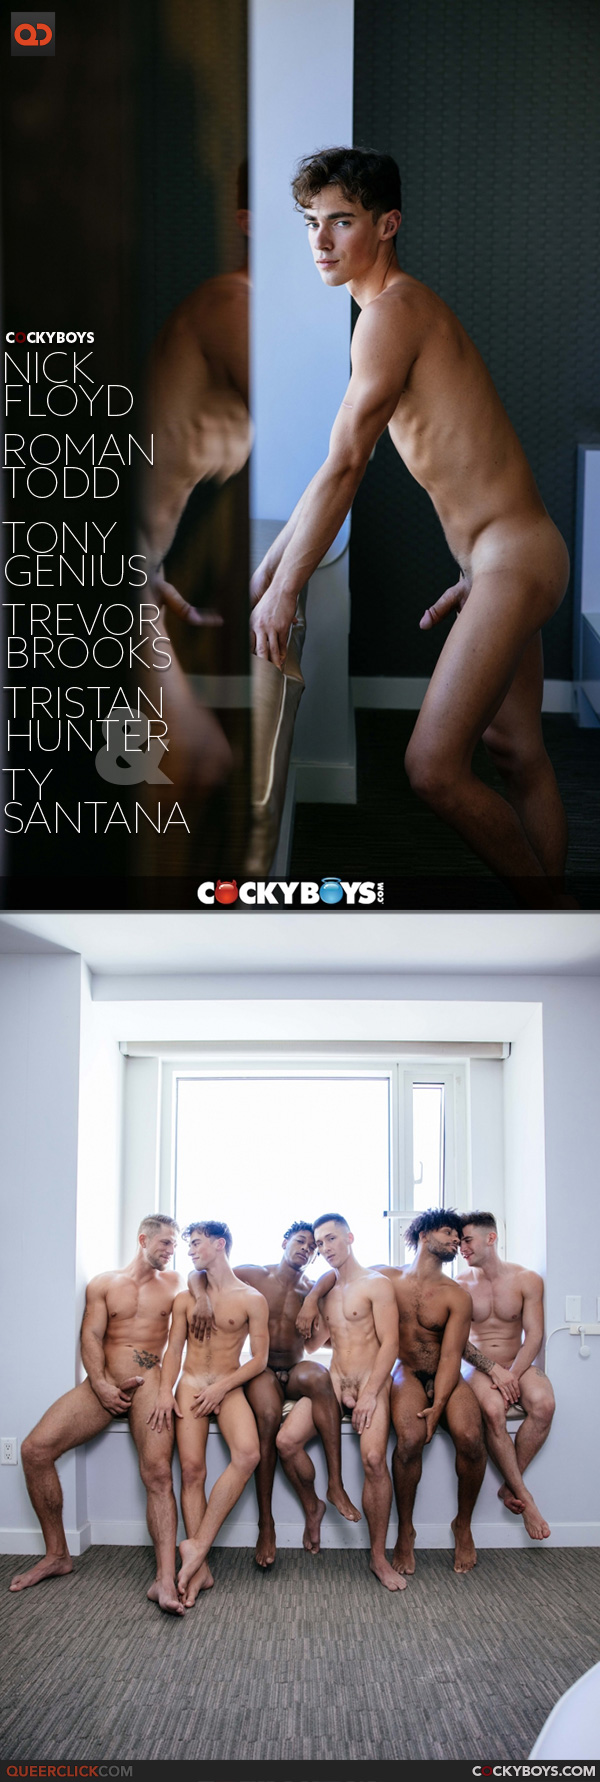 CockyBoys: Nick Floyd, Tristan Hunter, Roman Todd, Tony Genius, Ty Santana, and Trevor Brooks